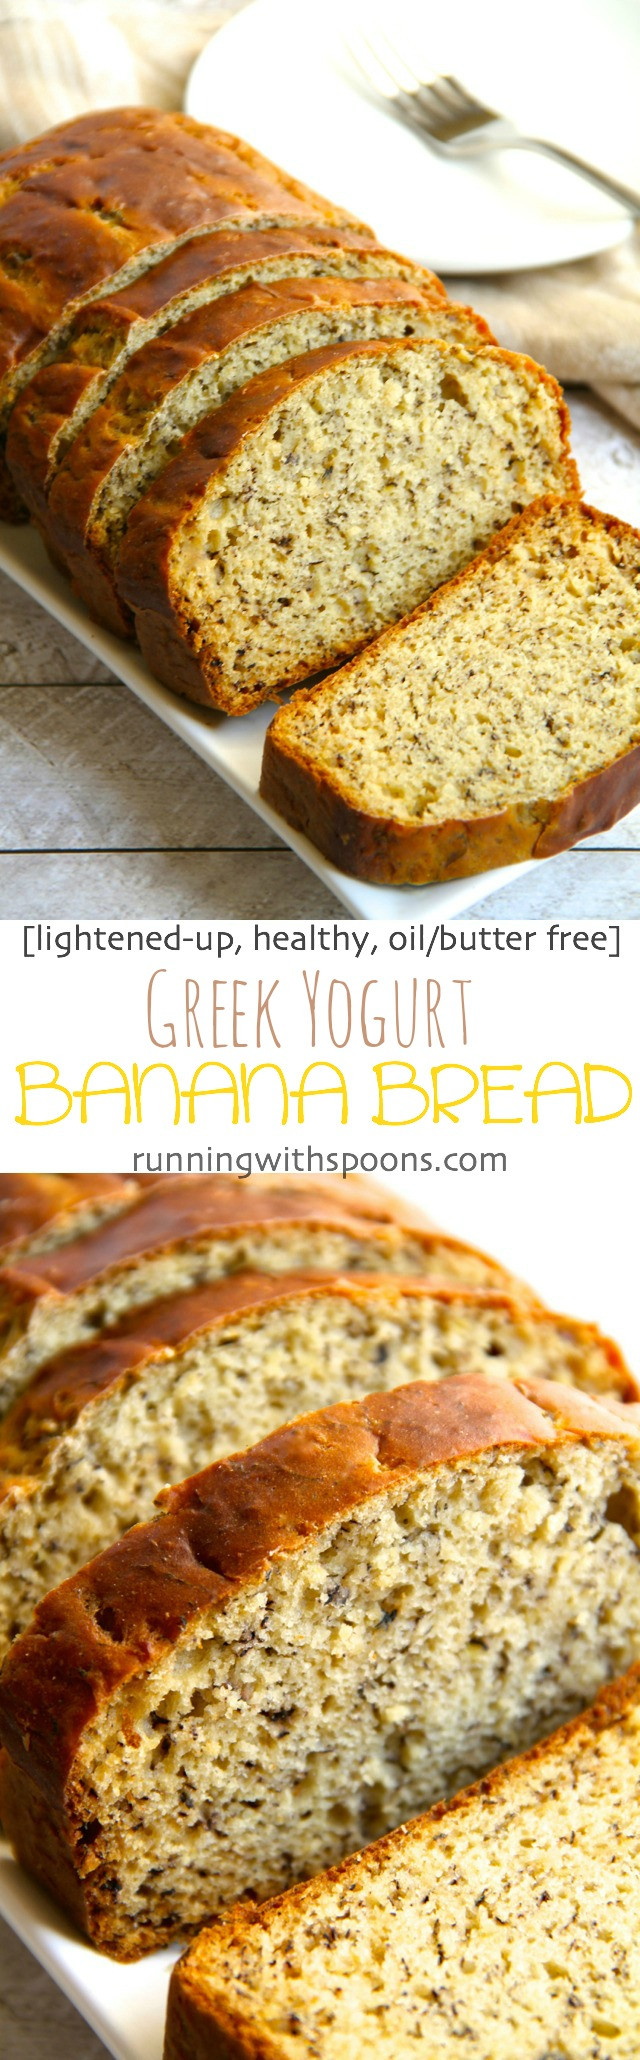 Banana Bread Recipe With Yogurt
 banana bread recipe with applesauce and yogurt